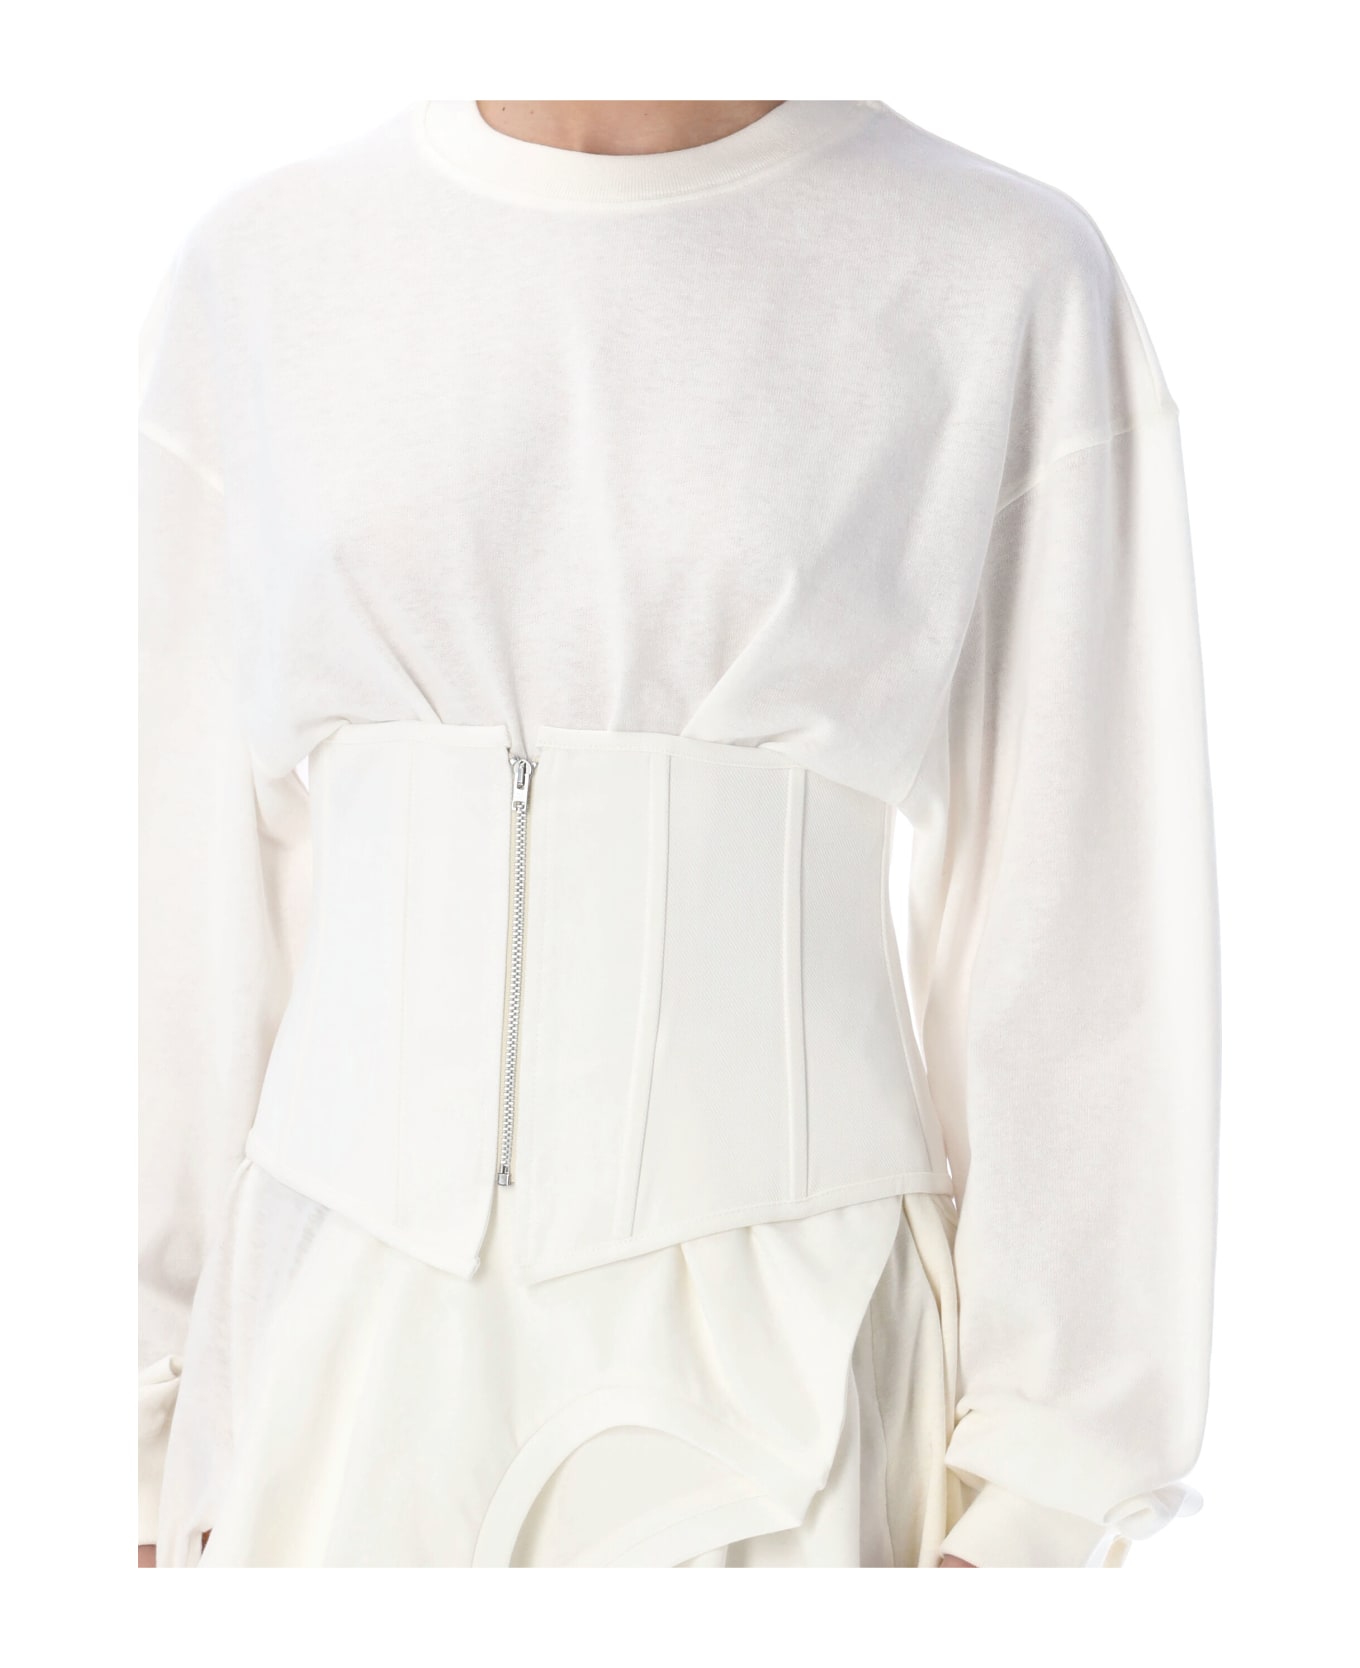 Acne Studios Fleece Mini Dress - WHITE